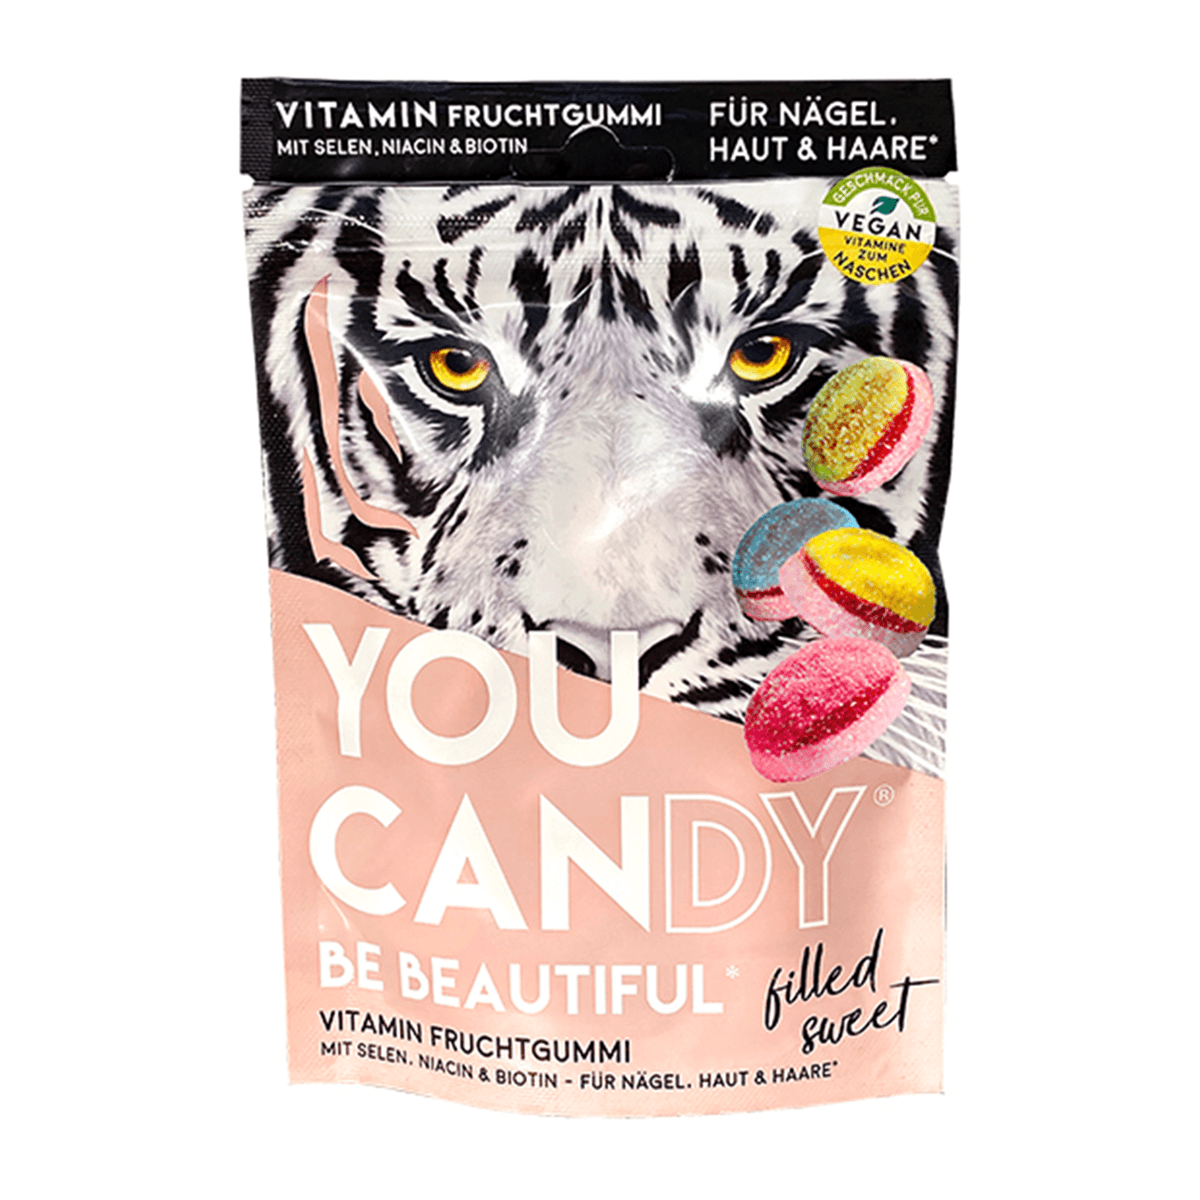 Be Beautiful - Vegan Vitamin Gummies mit Selen, Niacin & Biotin - You Candy 100g